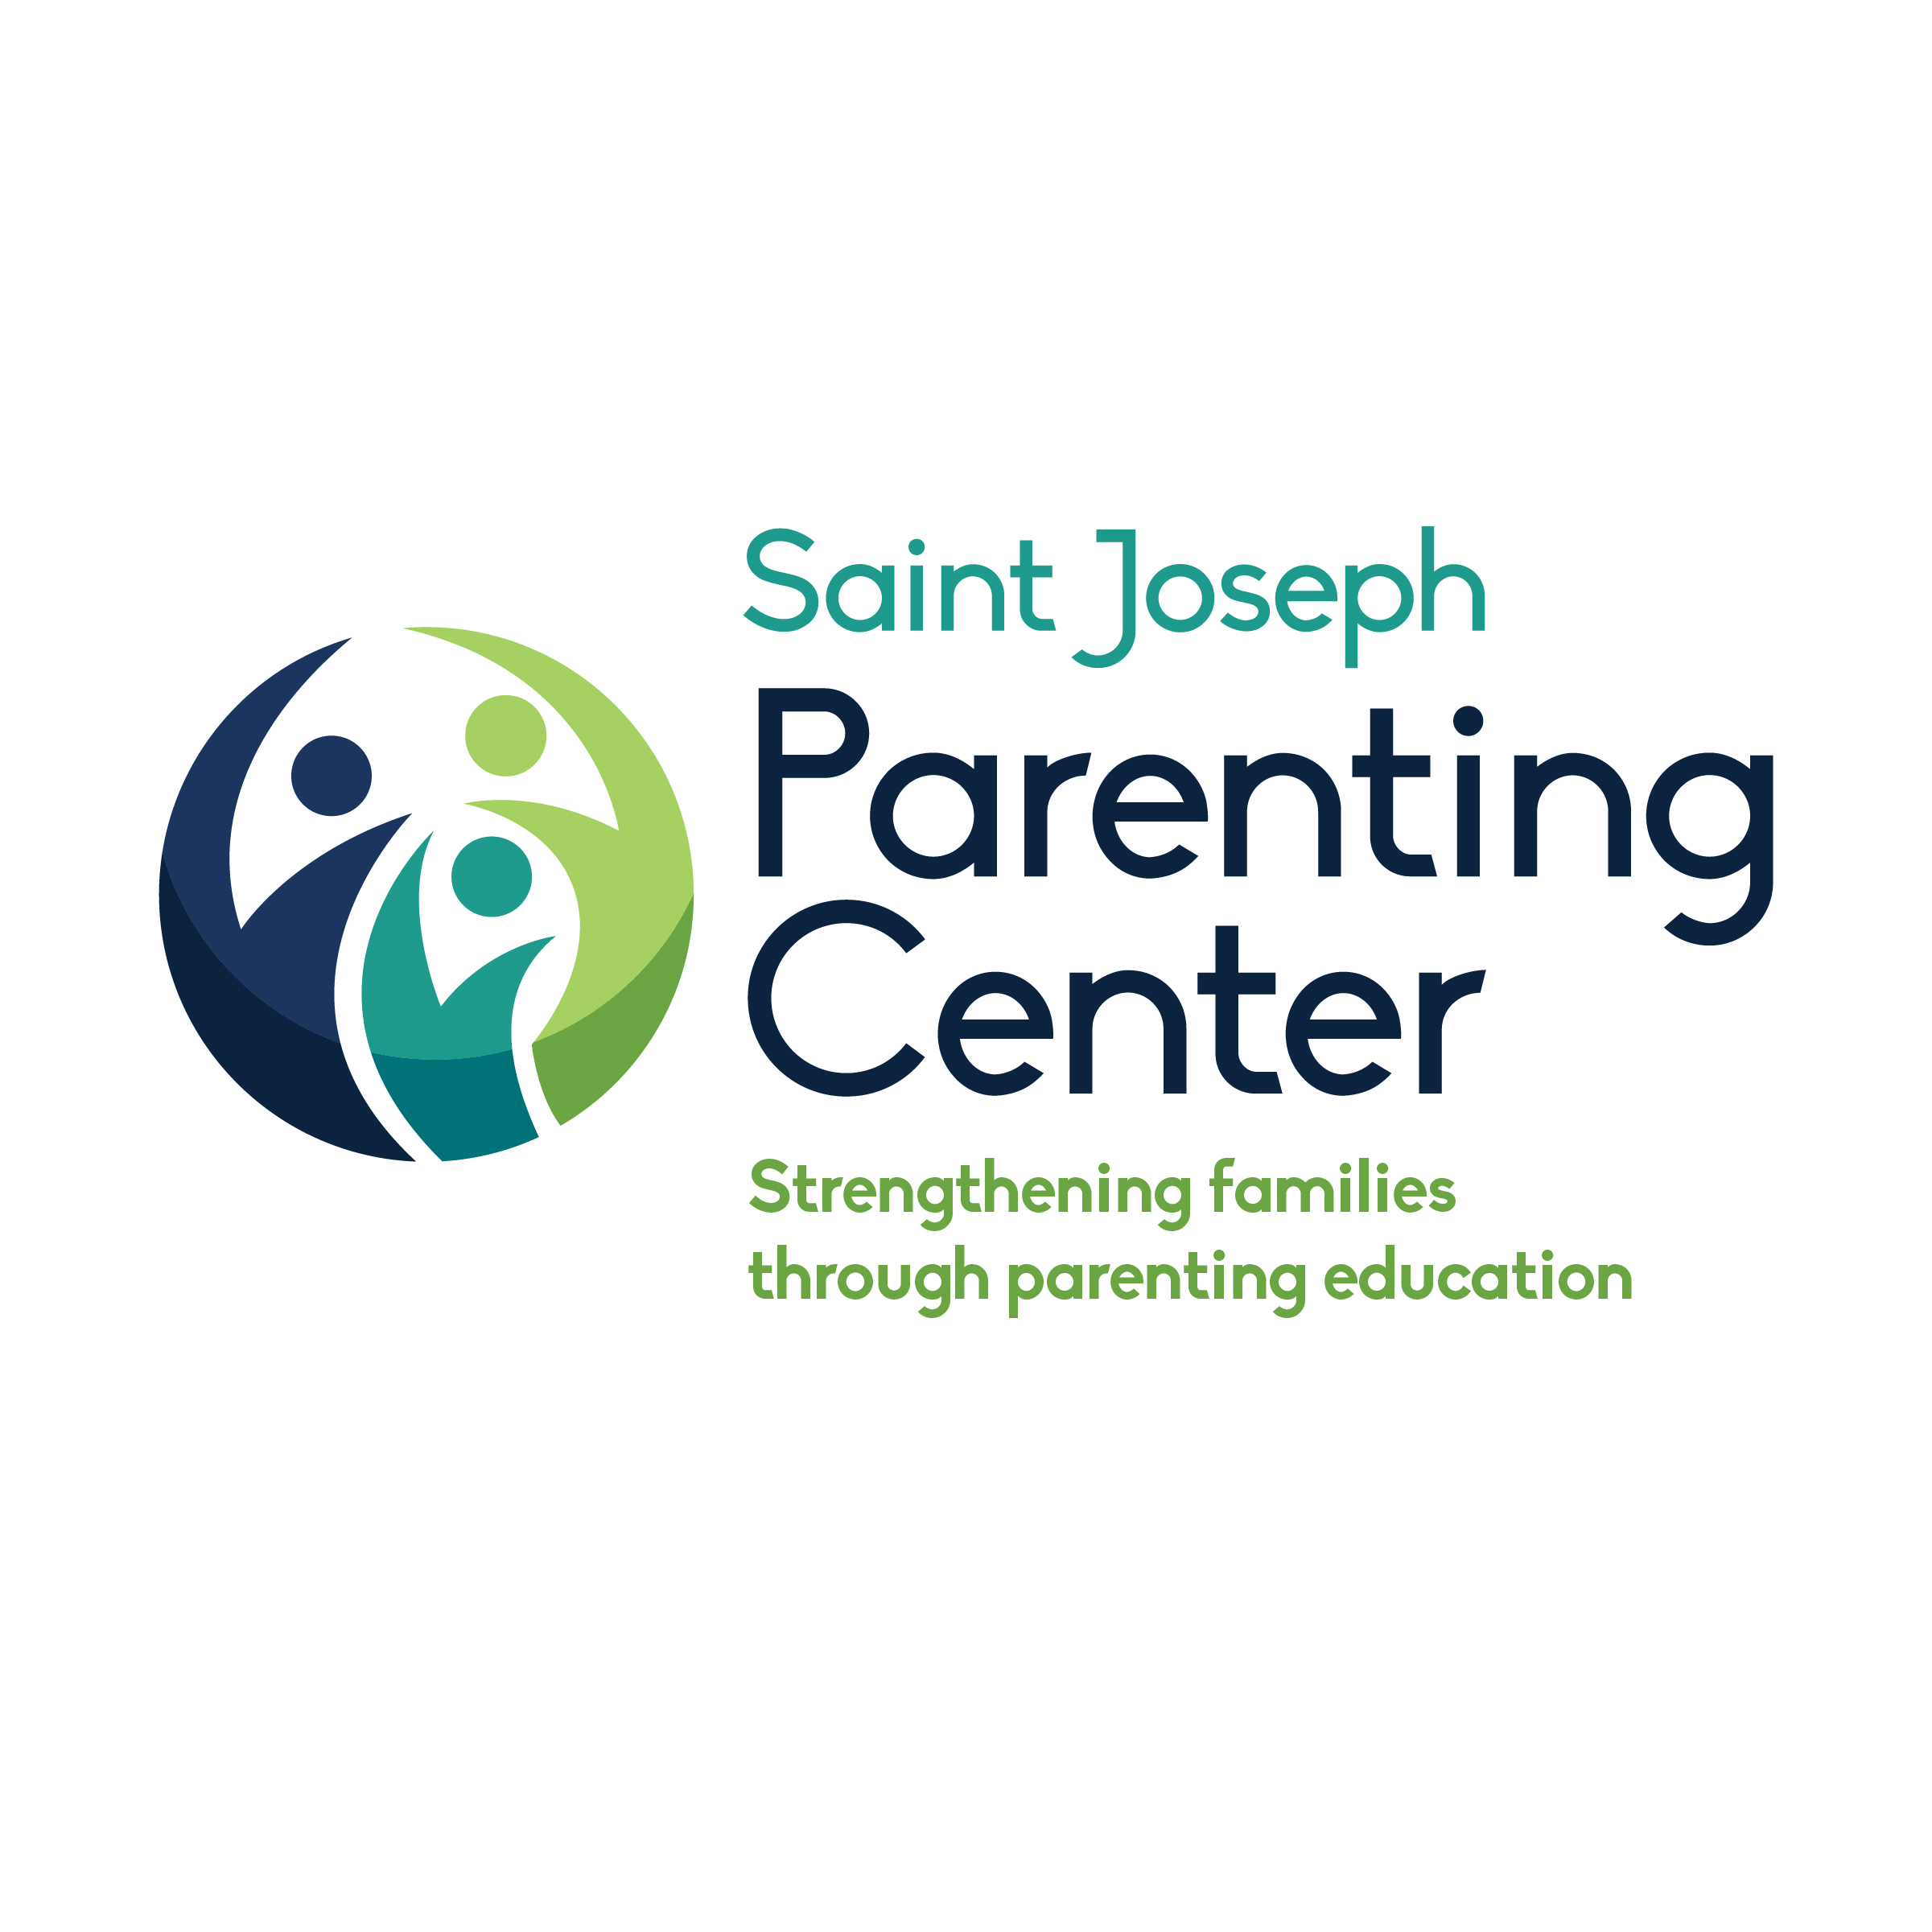 Saint Joseph Parenting Center